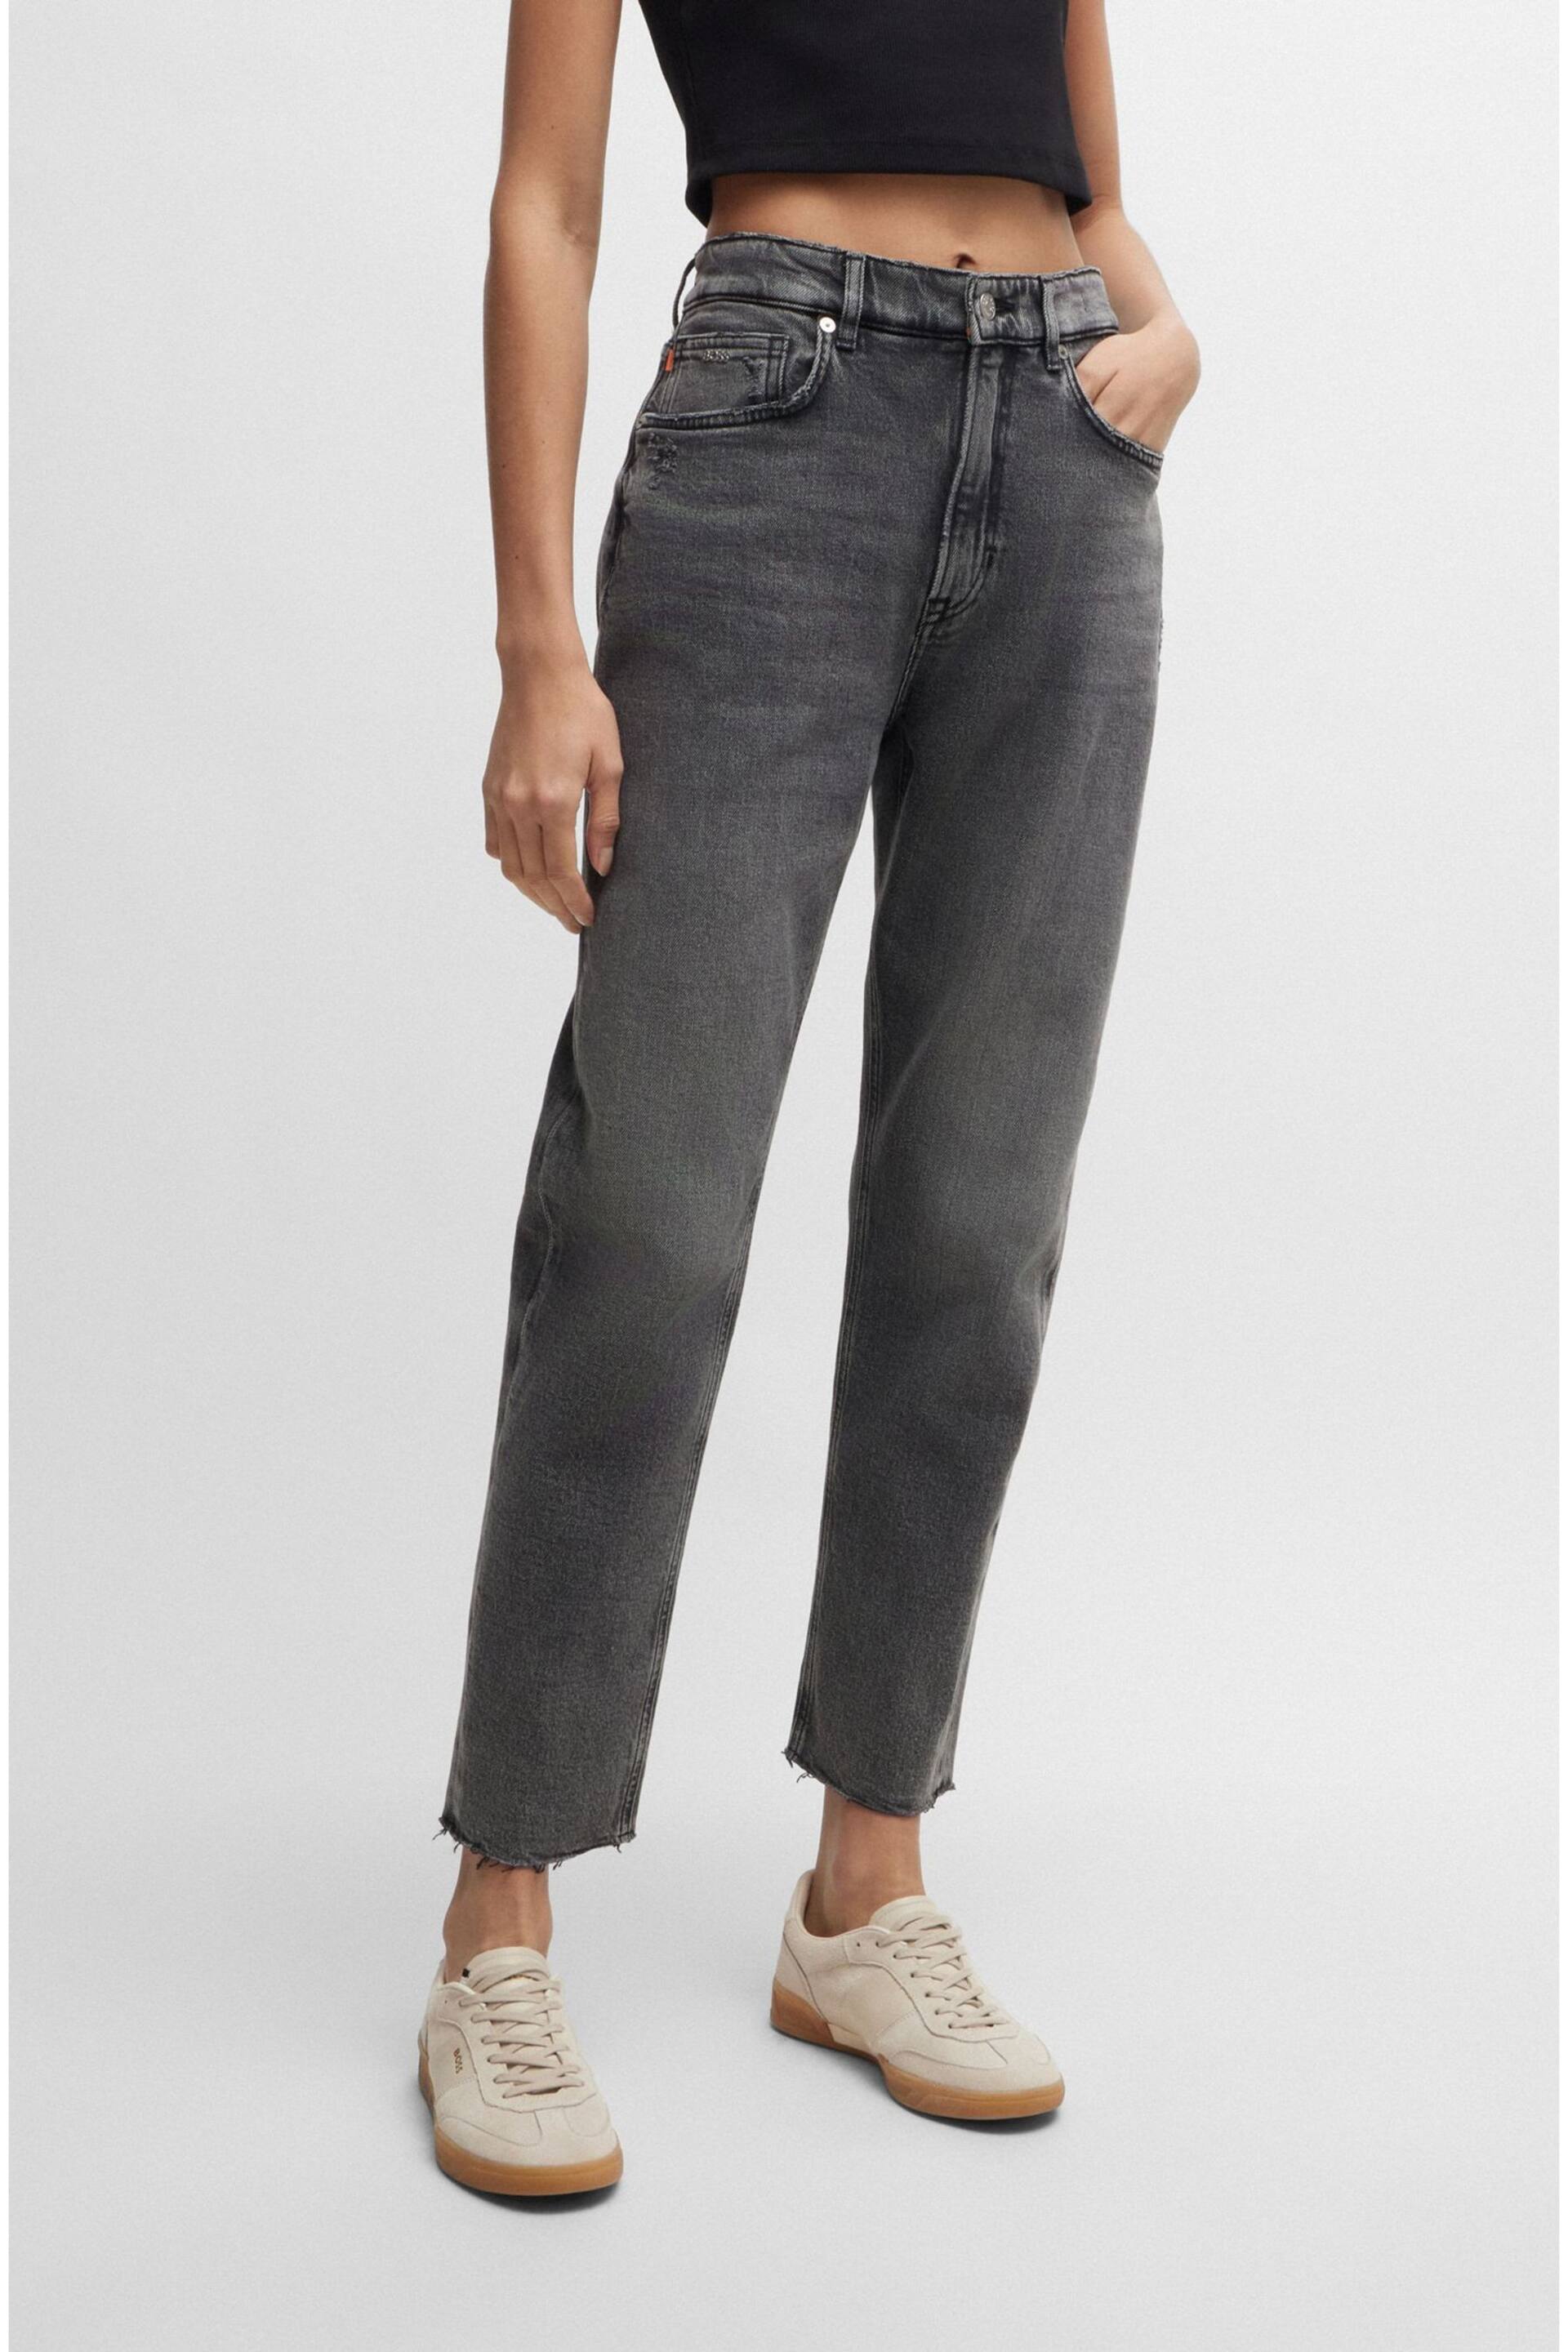 BOSS Grey Tapered Raw Hem Stretch Denim Jeans - Image 1 of 5